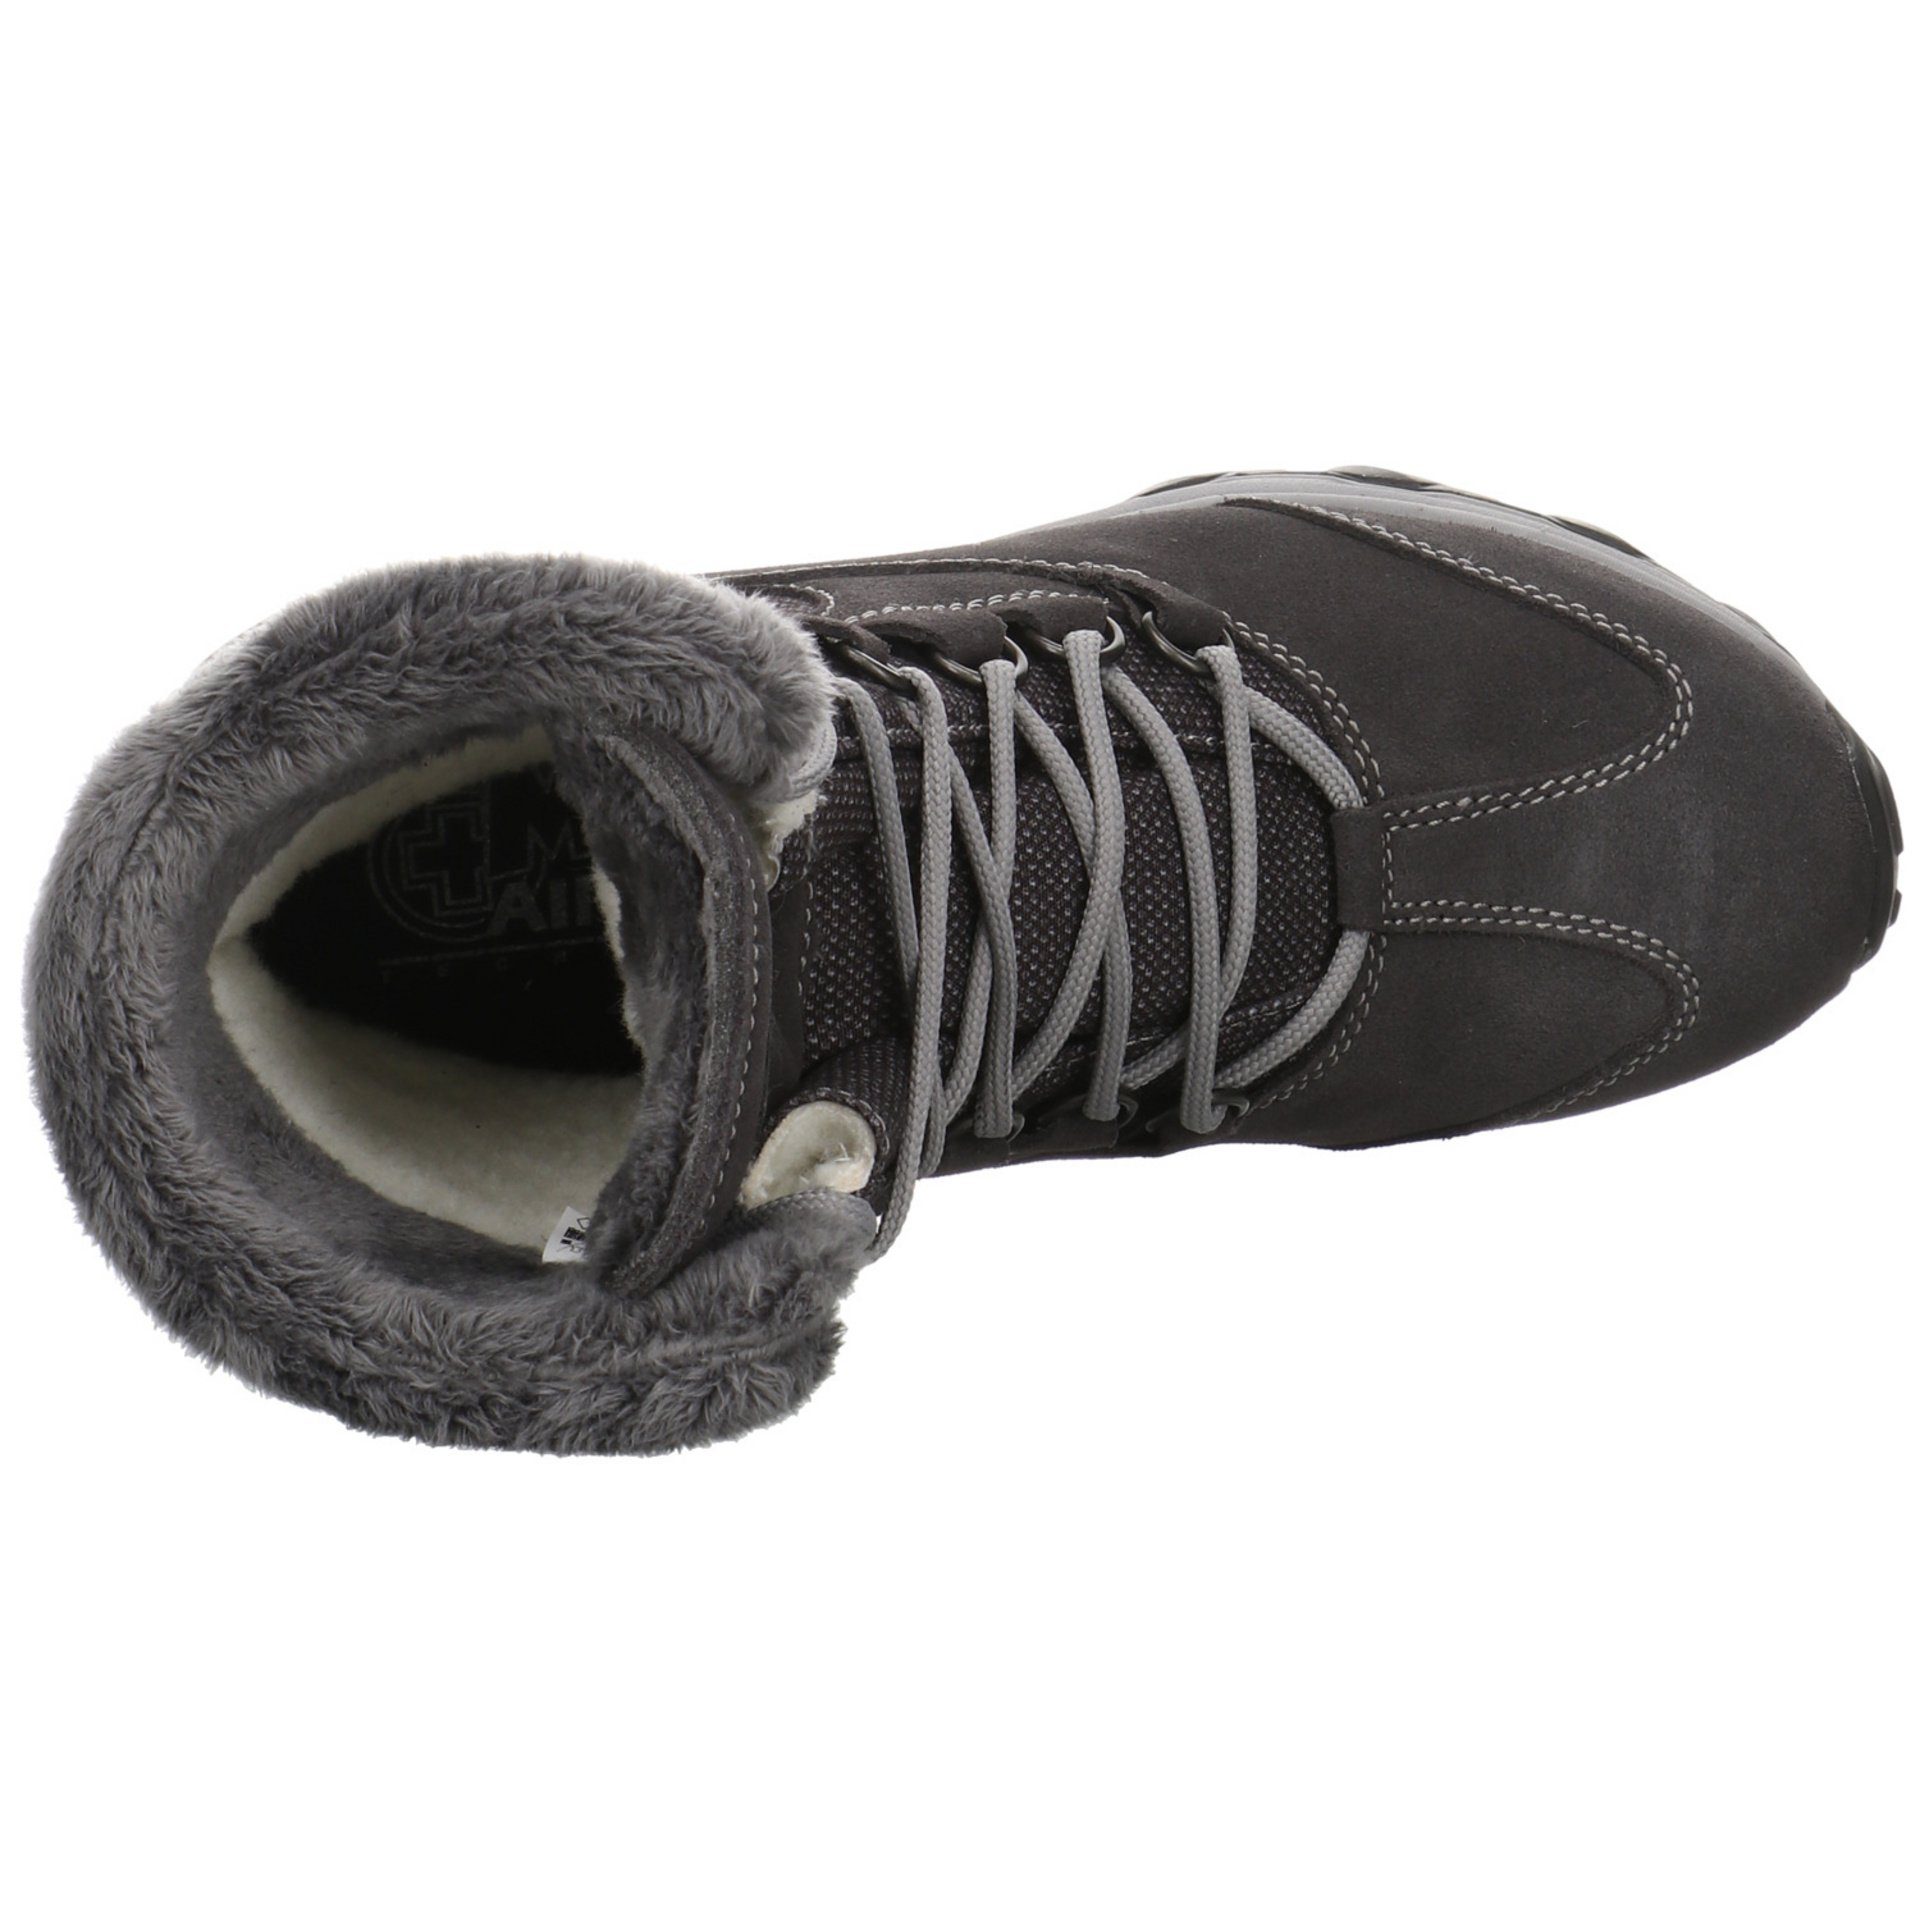 Lady Grau Snowboots Civetta Leder-/Textilkombination (11602028) Meindl GTX Leder-/Textilkombination Boots